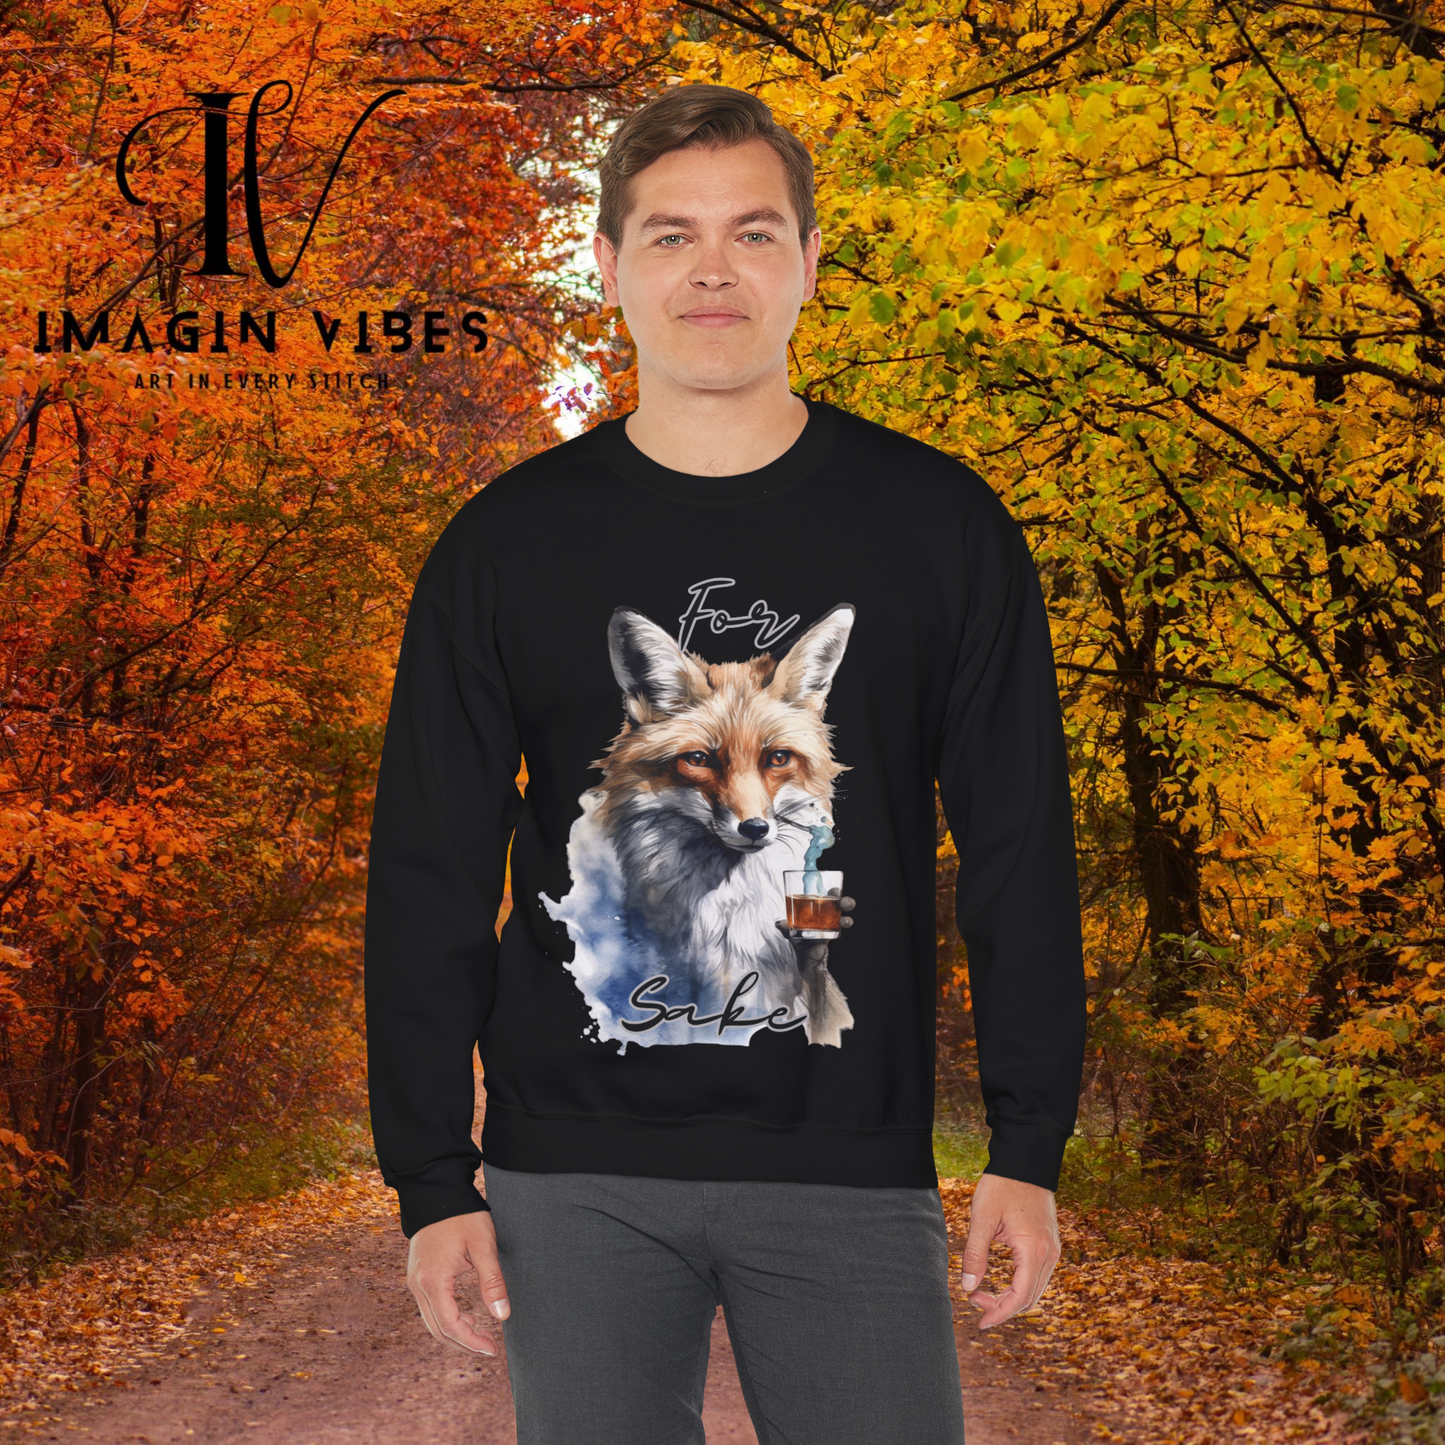 For Fox Sake: Funny Fox Sweatshirt | Gift for Fox Lover | Animal Lover Shirt - Cute Fox Gift for Nature Enthusiasts Sweatshirt   